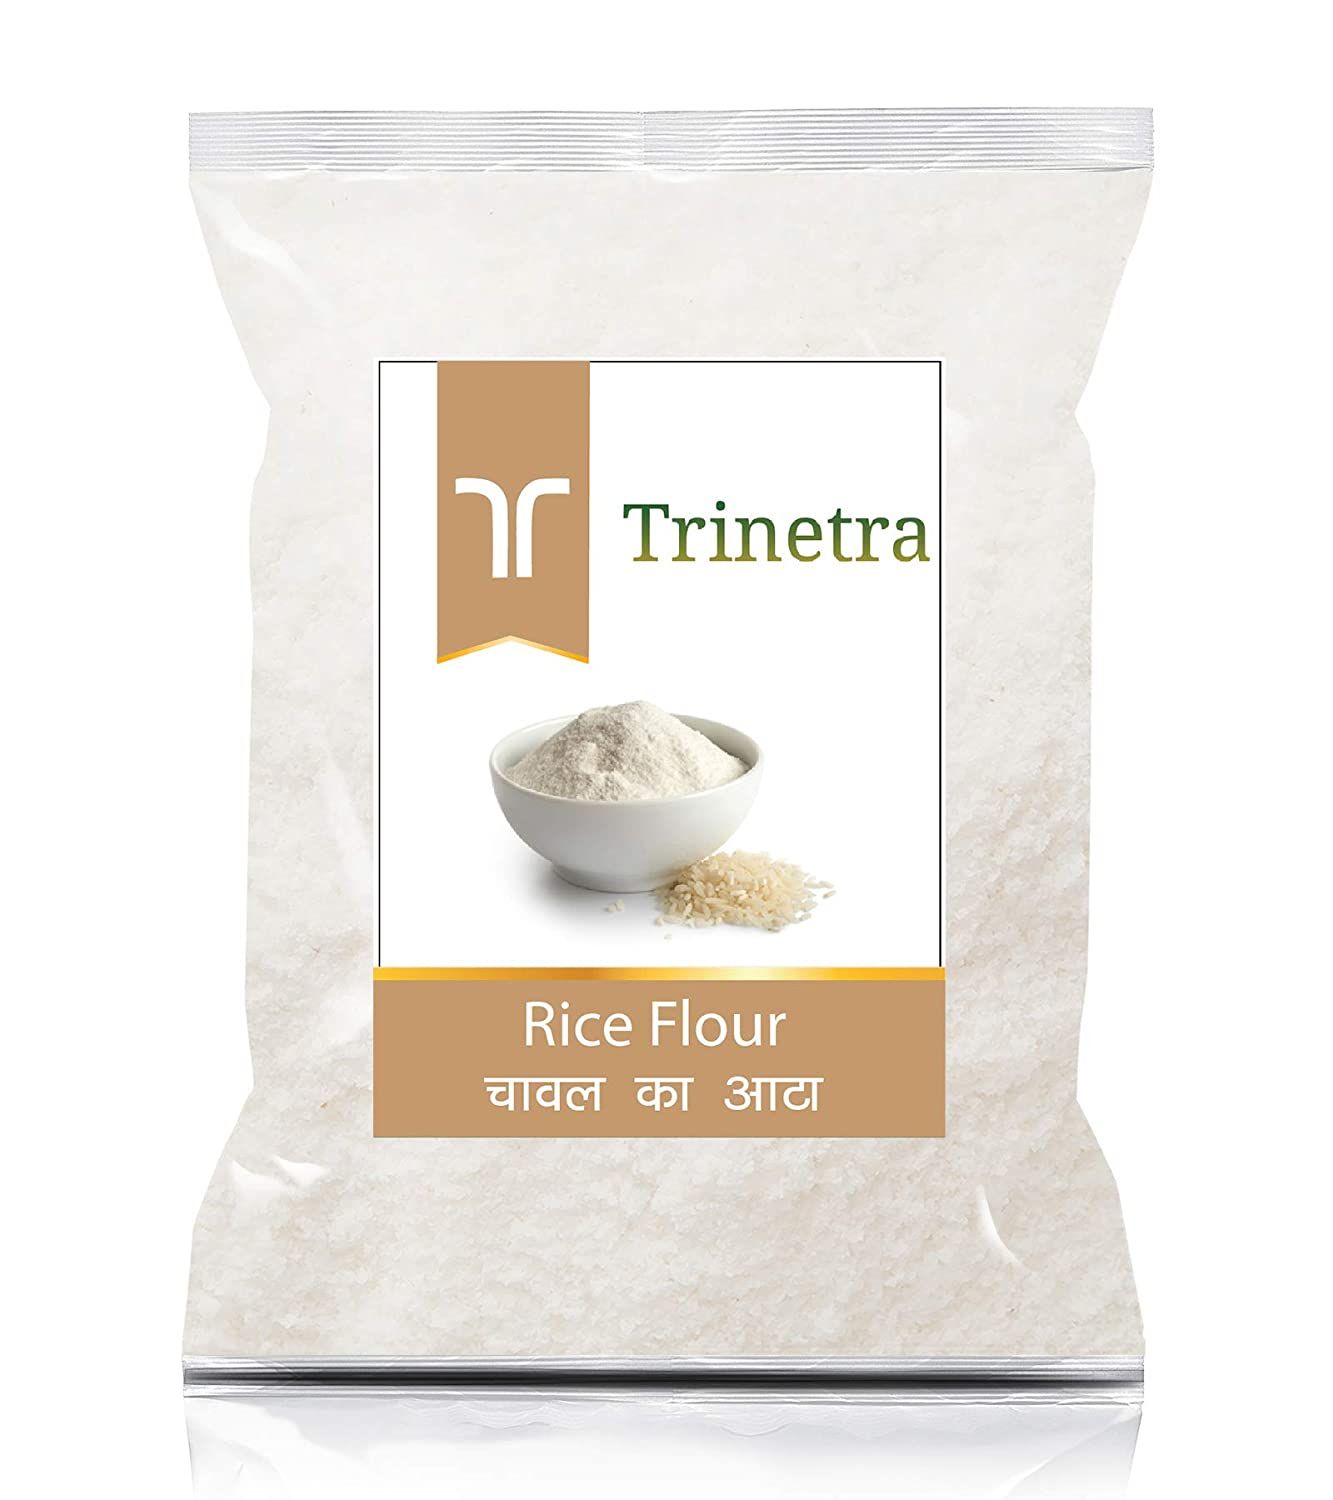 Trinetra Rice Flour Image